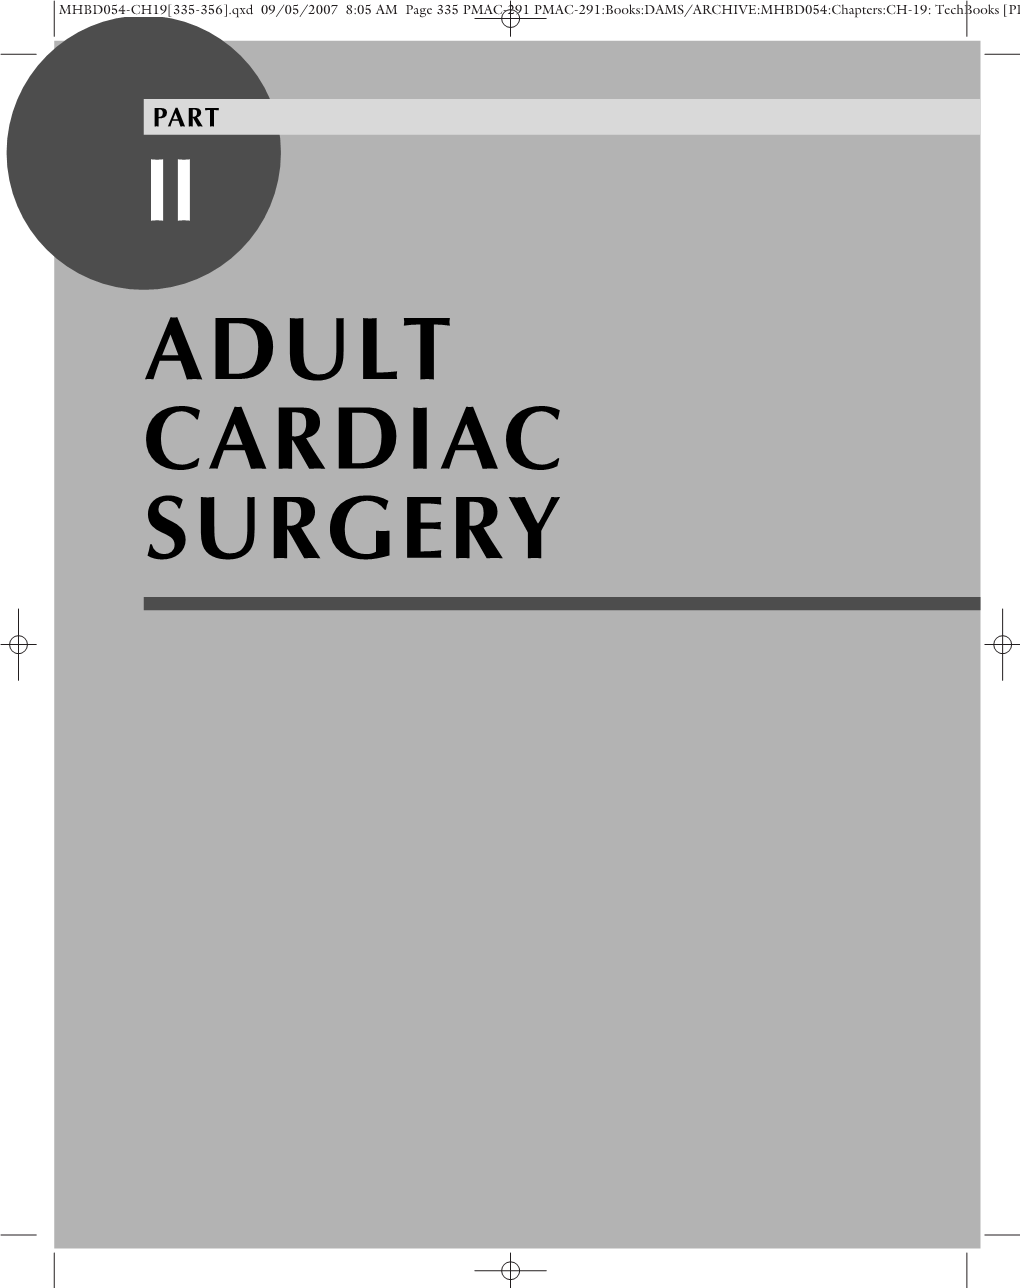 Adult Cardiac Surgery Ii